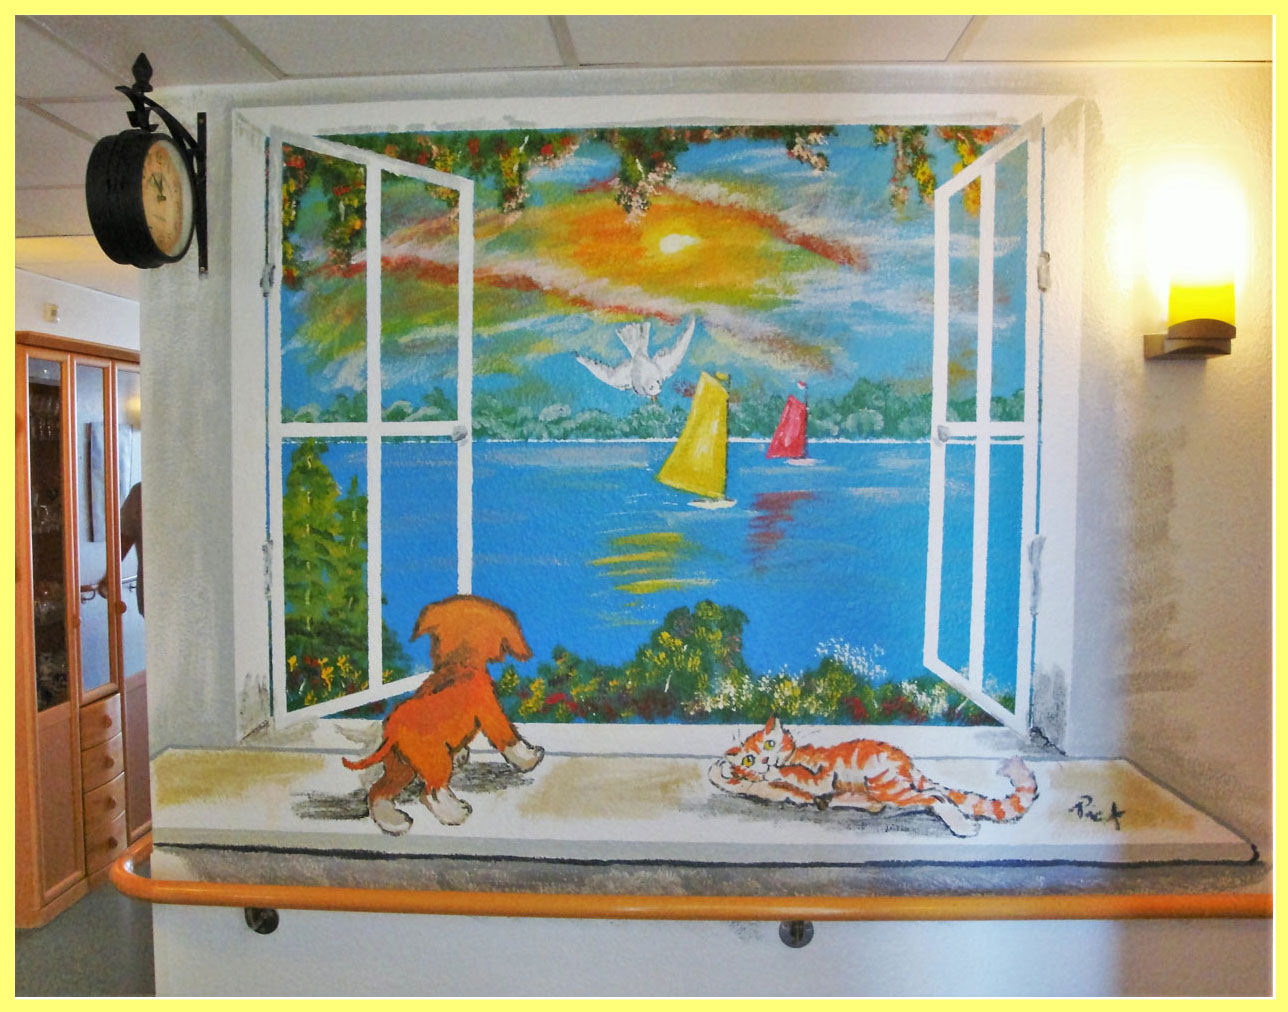 Illusionsmalerei - Wand in einem Pflegeheim - Malerin Petra Rick 2013 - Acryl